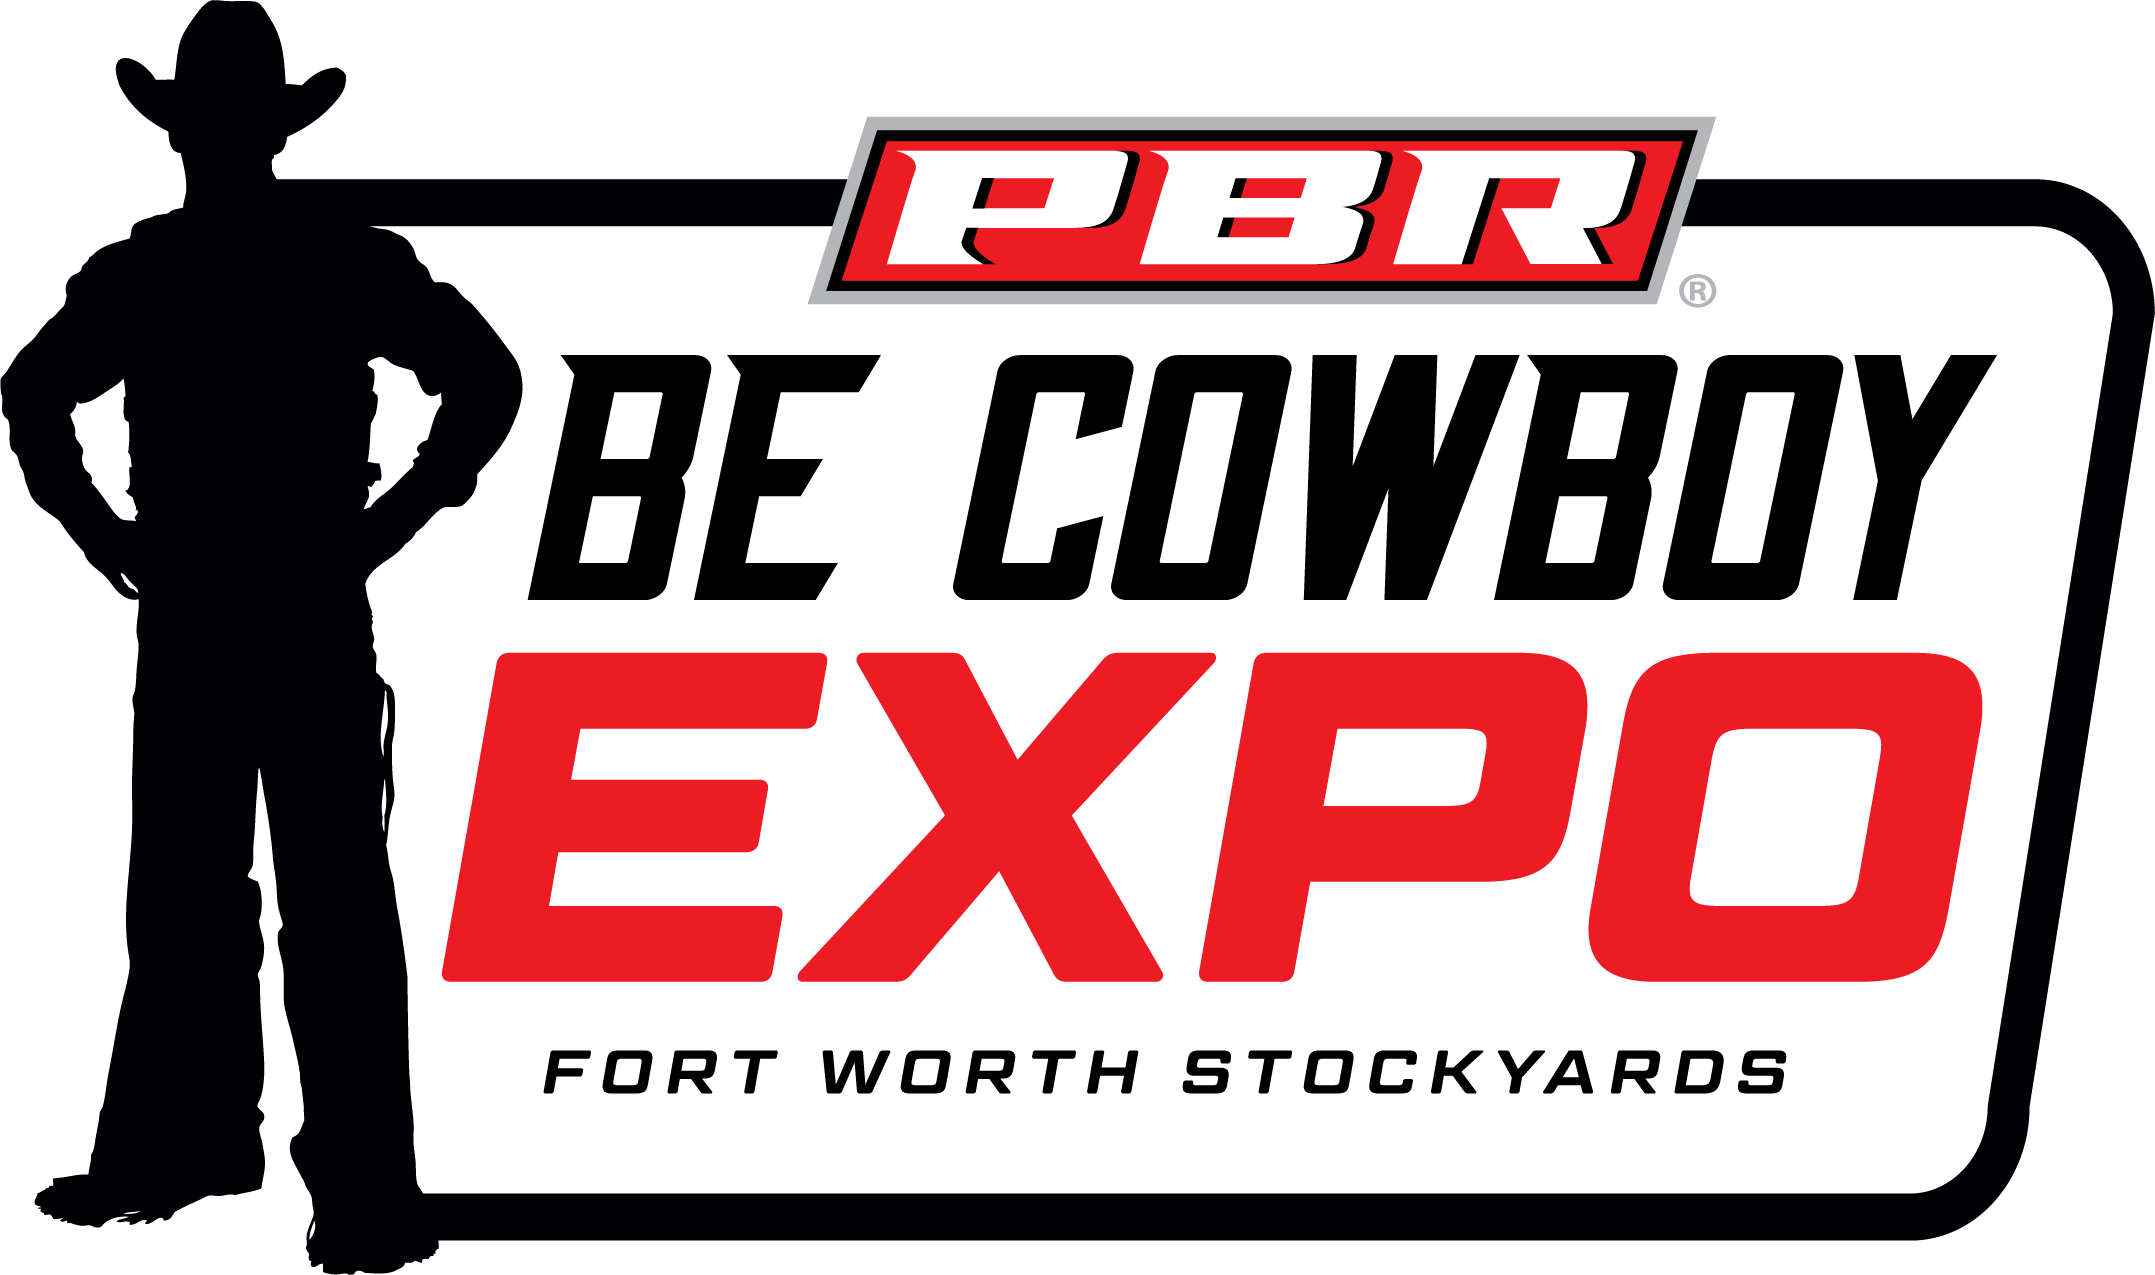 PBR be cowboy expo logo